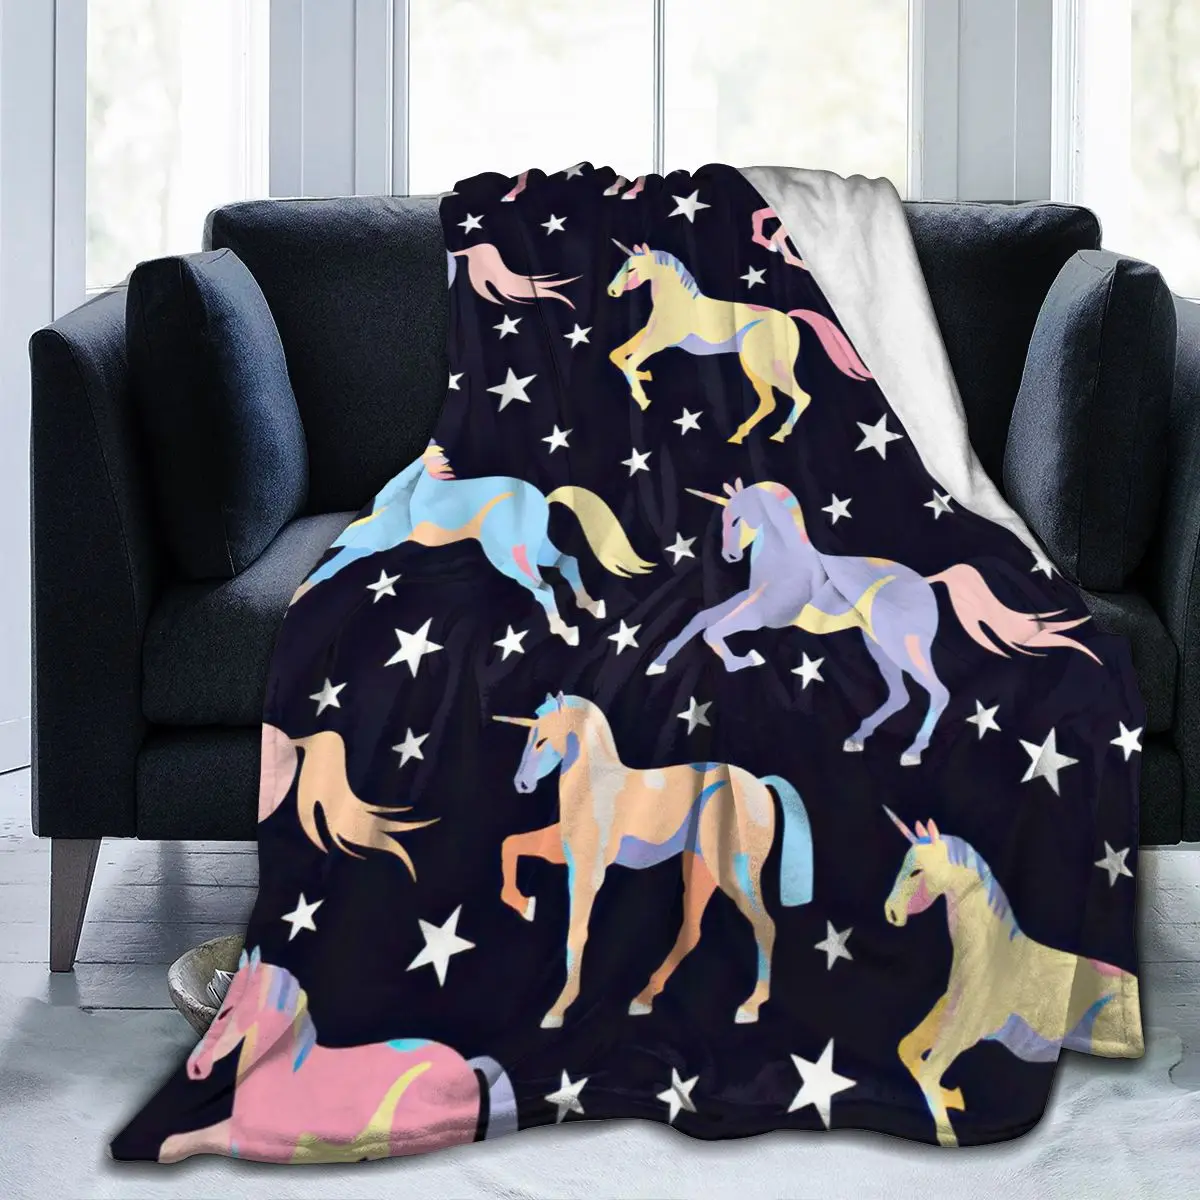 

Super soft sofa blanket plaid collage sublimation cartoon animation bedding flannel plaid blanket bedroom decorative blanket 12